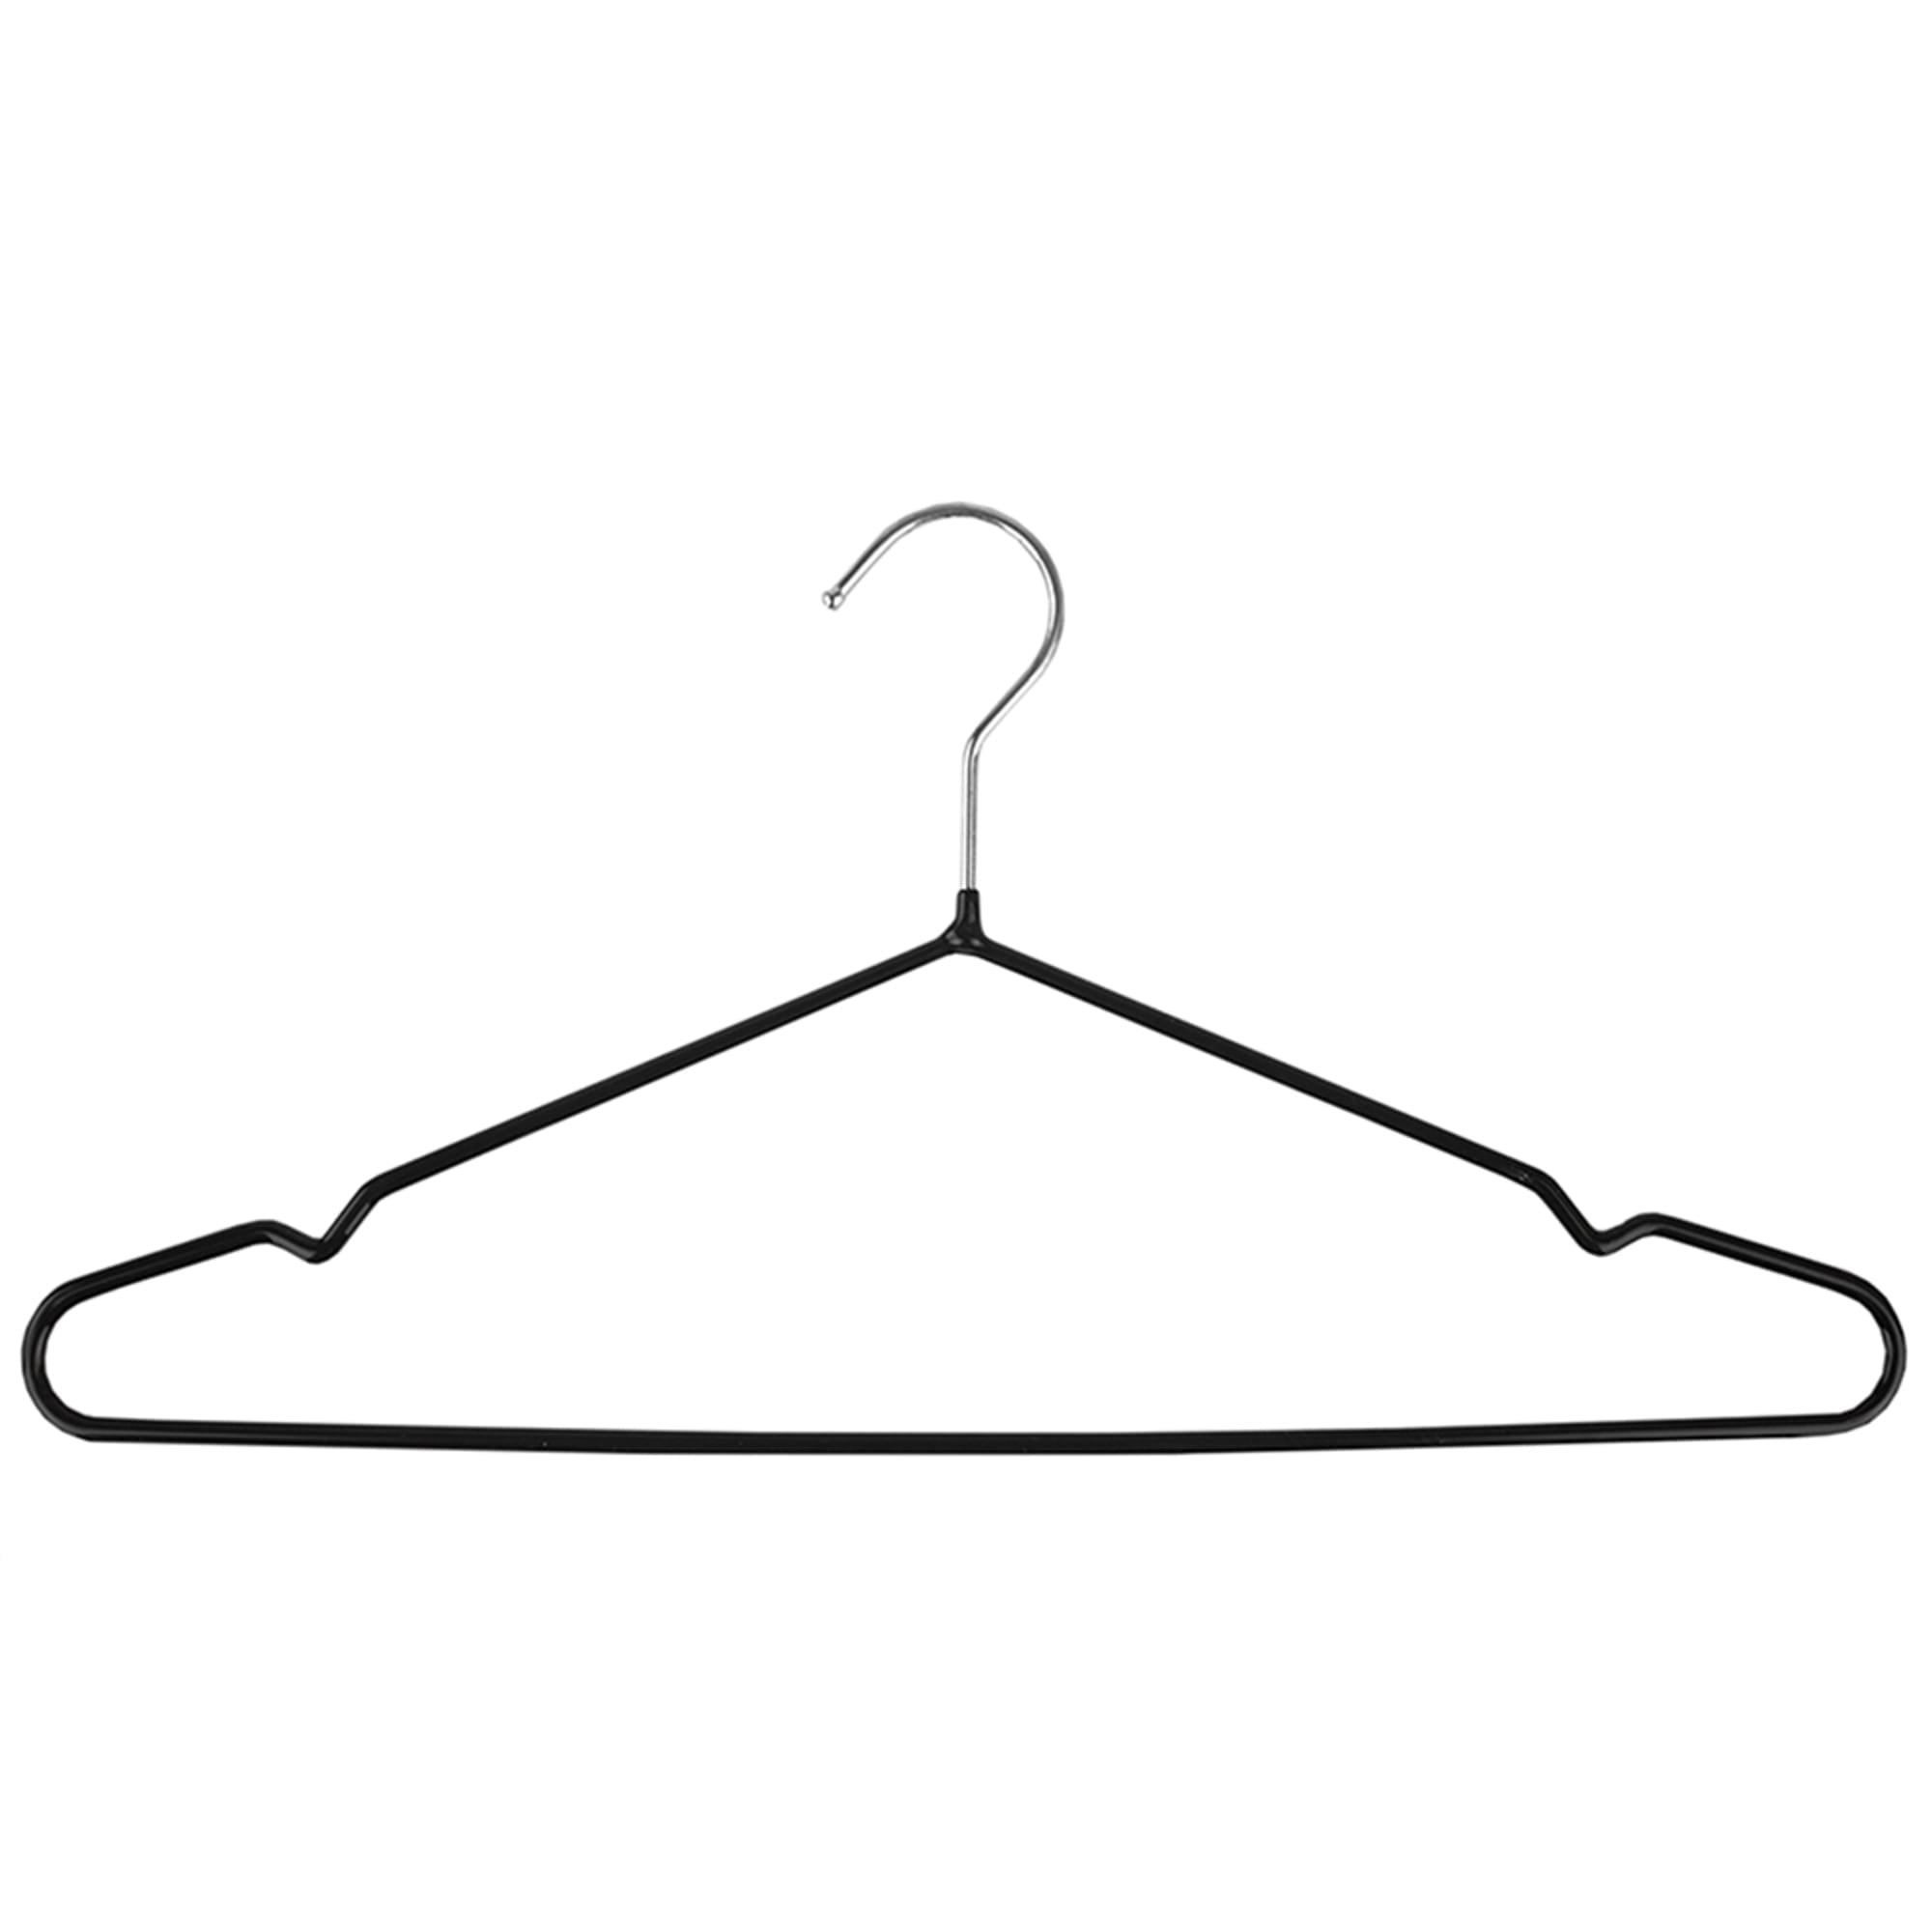 Home Basics 10 Piece Plastic Hanger Set, White, STORAGE ORGANIZATION